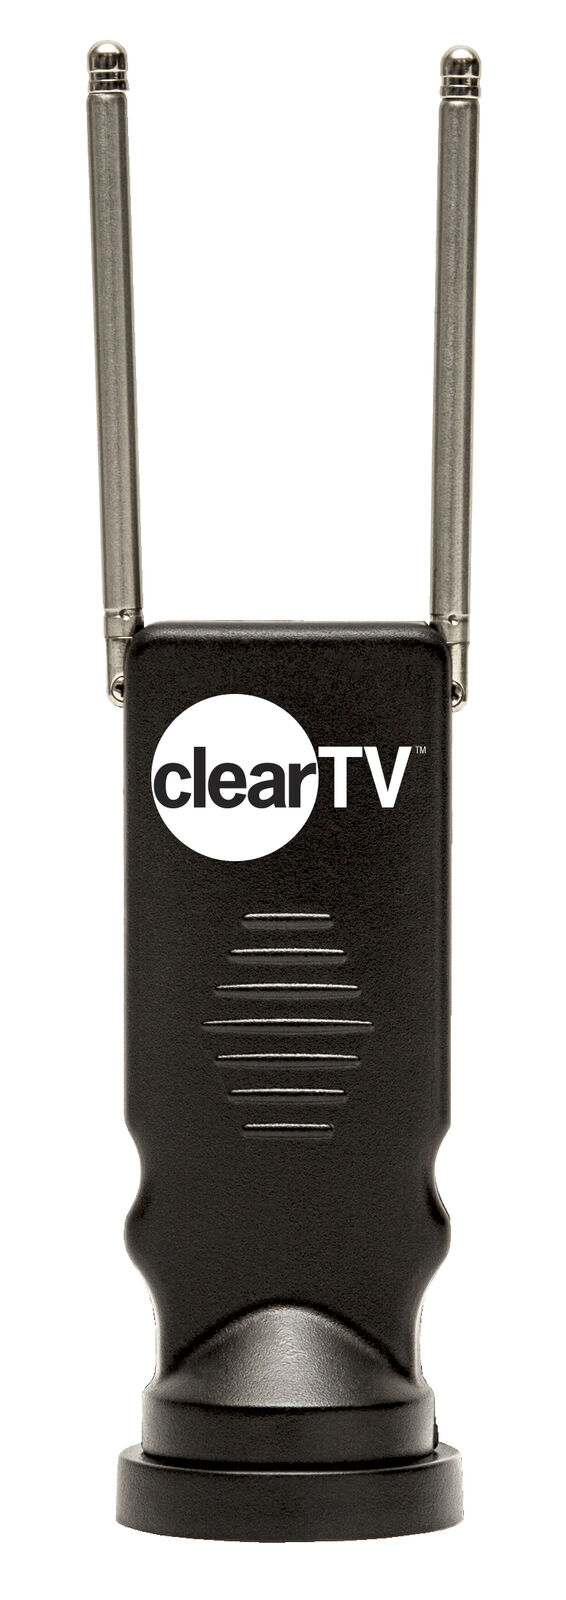 CLEAR TV PREMIUM Hdtv 25% OFF Antenna Tv NEW Seen On As Luxury goods